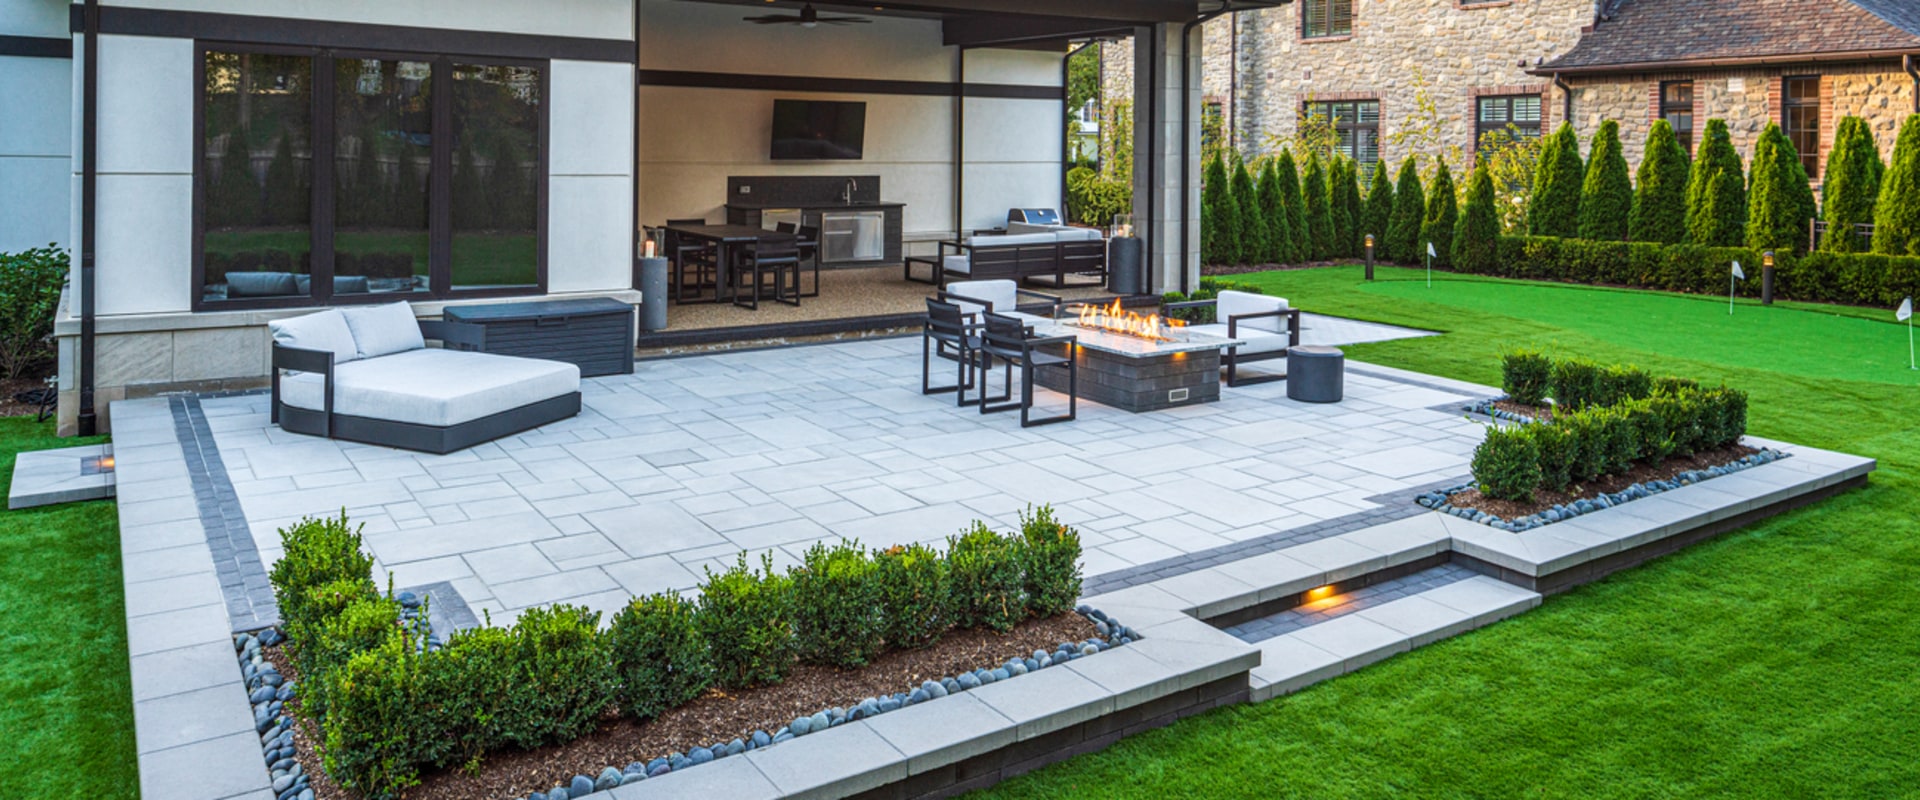 Building a Backyard Deck or Patio: Transform Your Outdoor Space